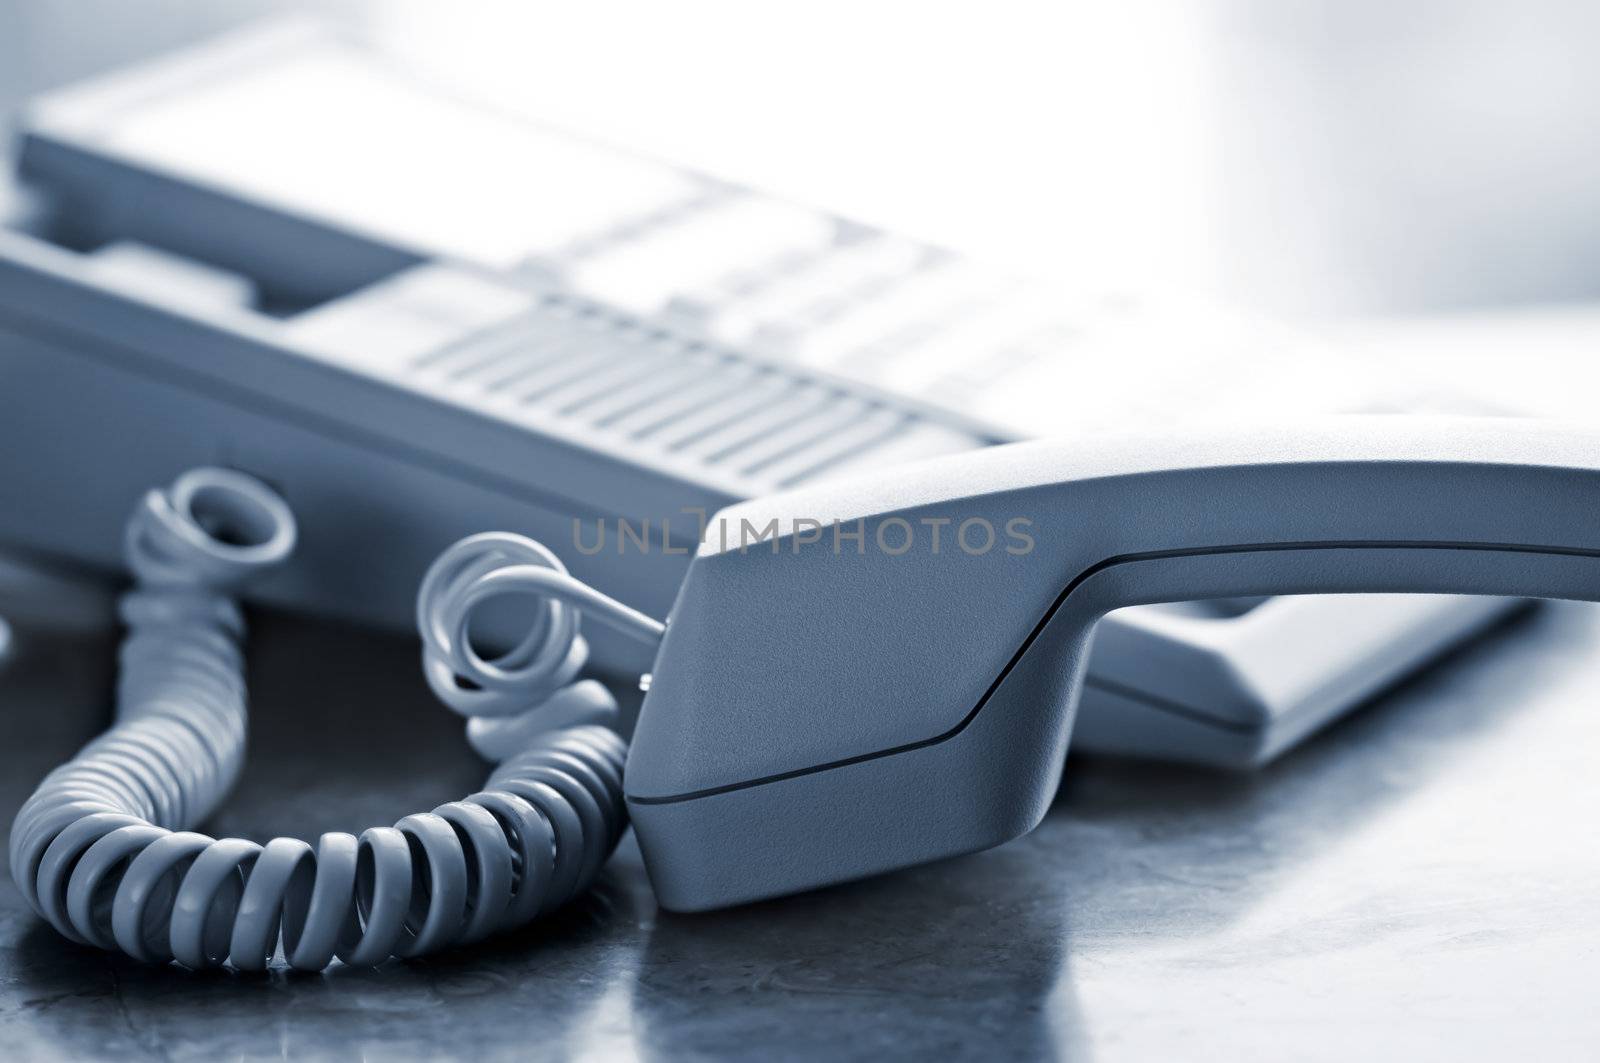 Telephone handset off the hook on desk